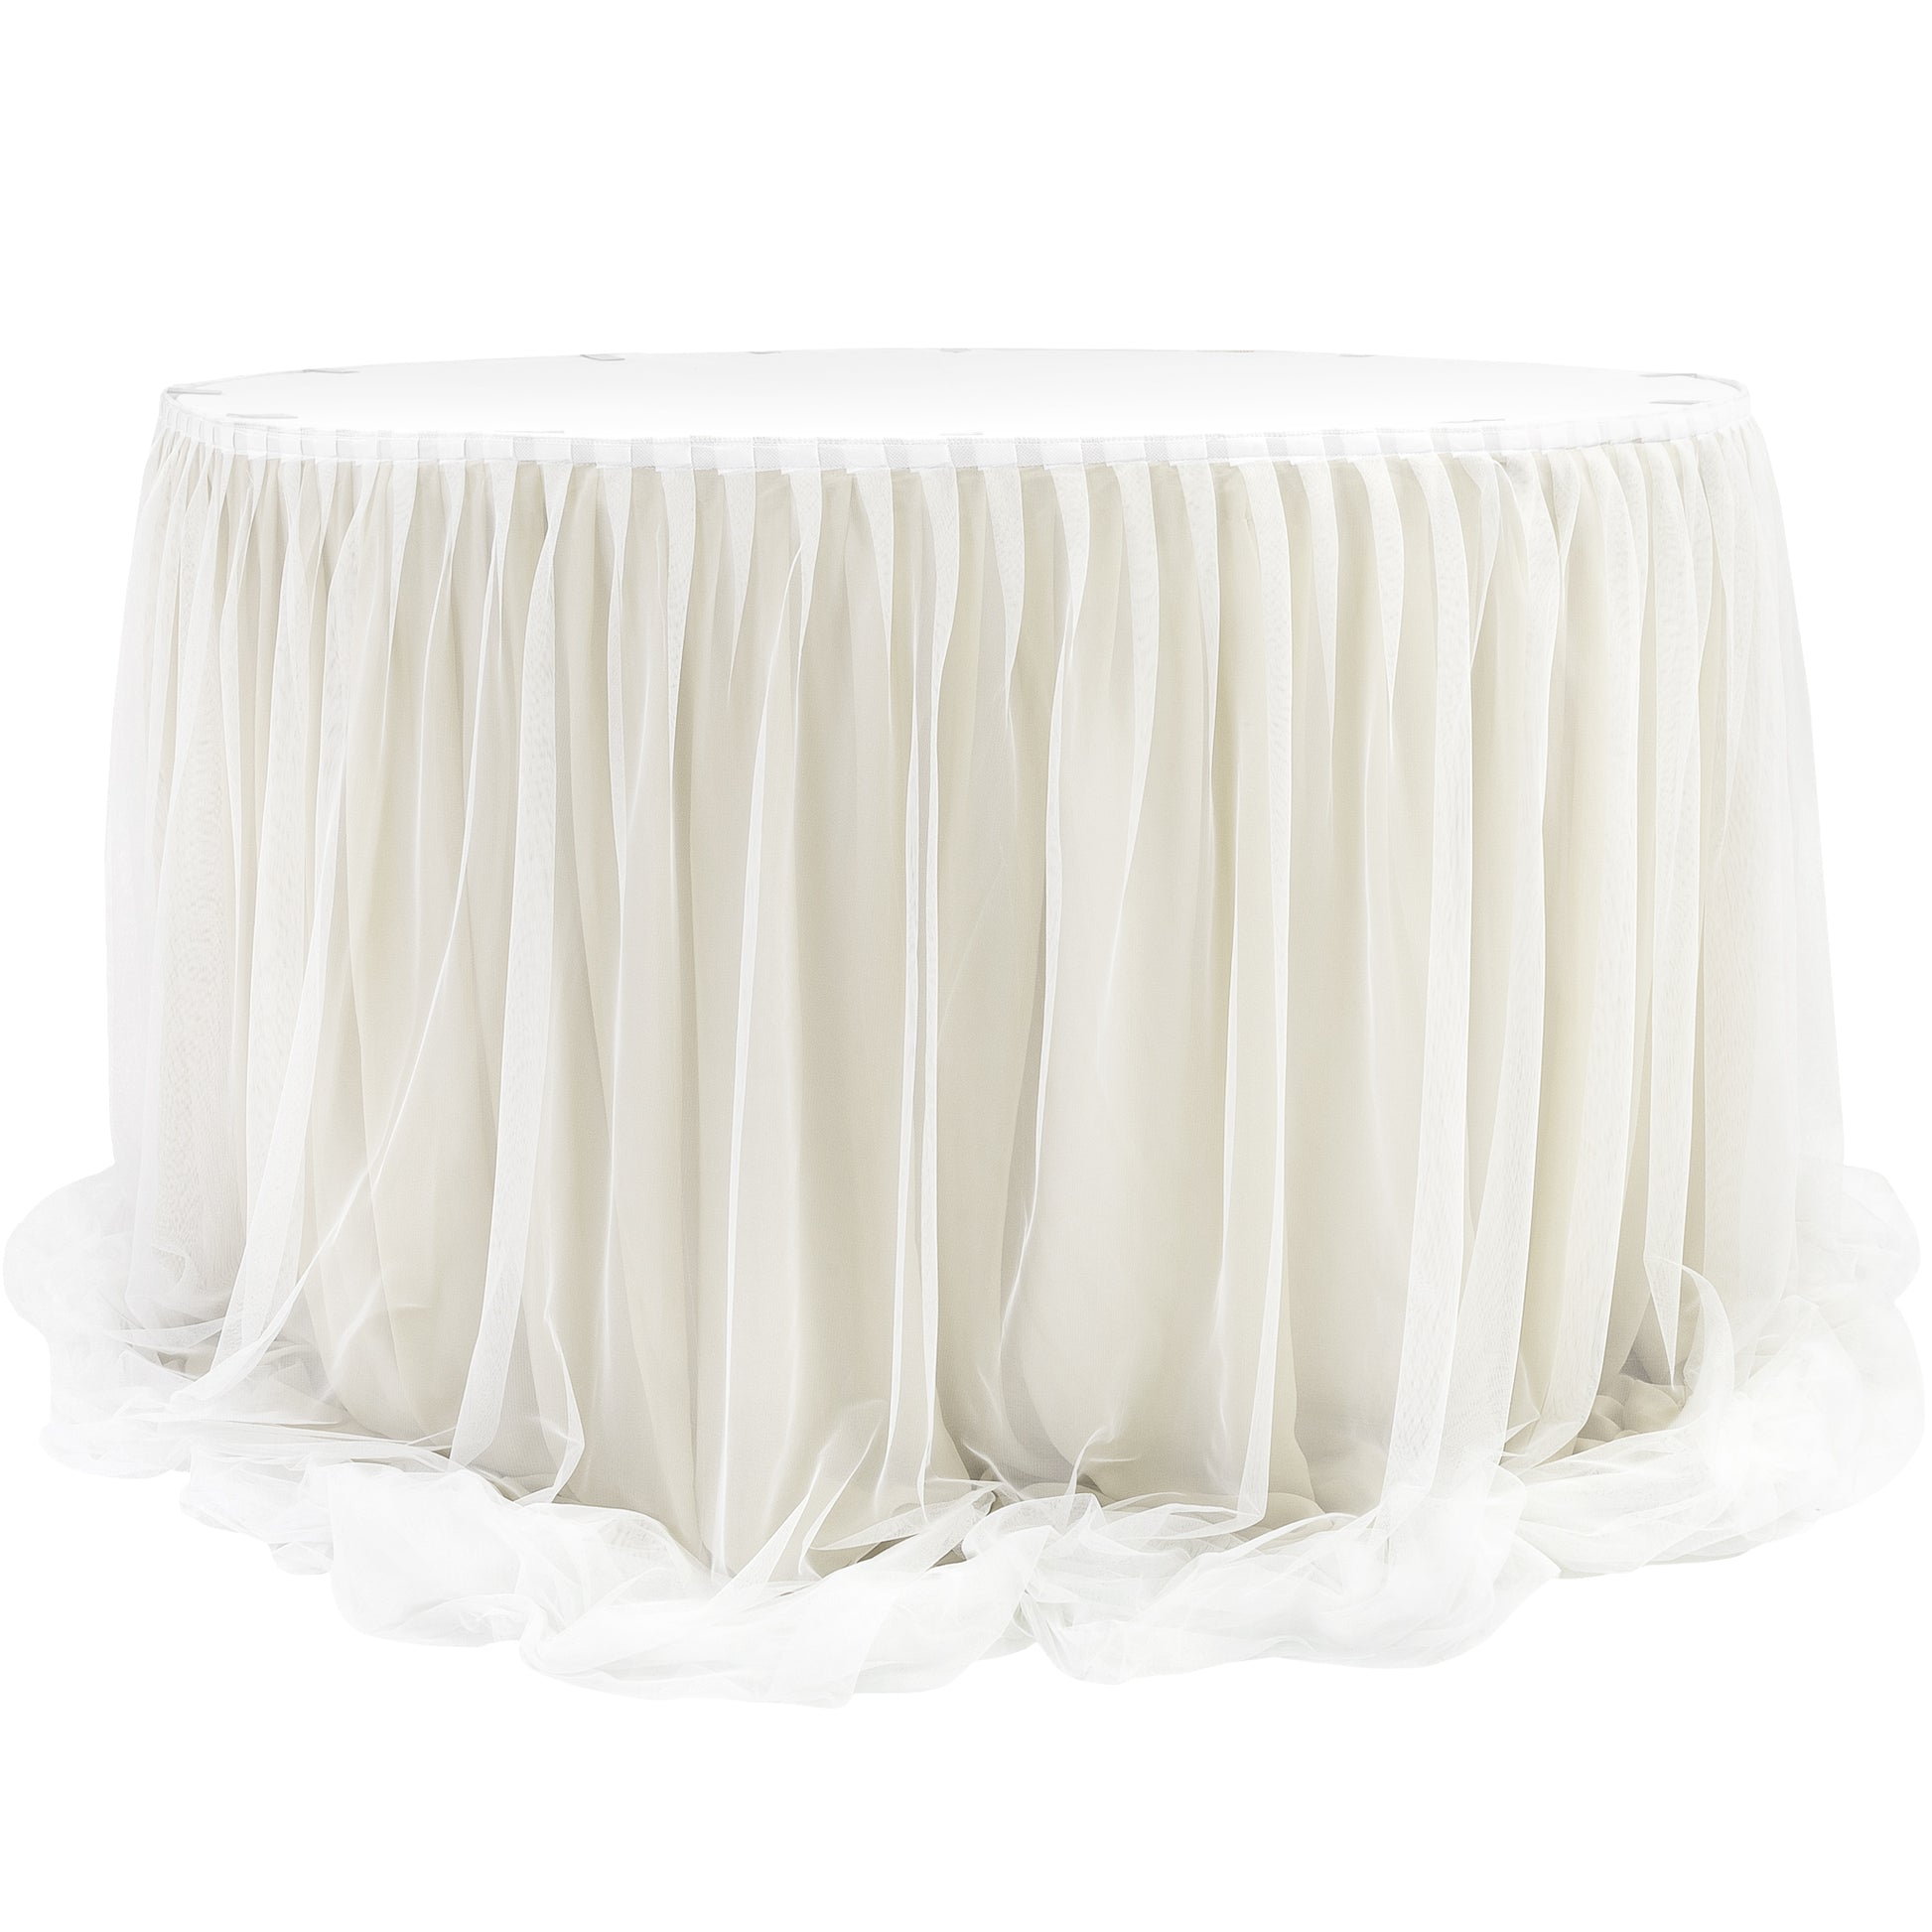 Chiffon Tulle Table Skirt Extra Long 57" x 17ft - Ivory & White - CV Linens